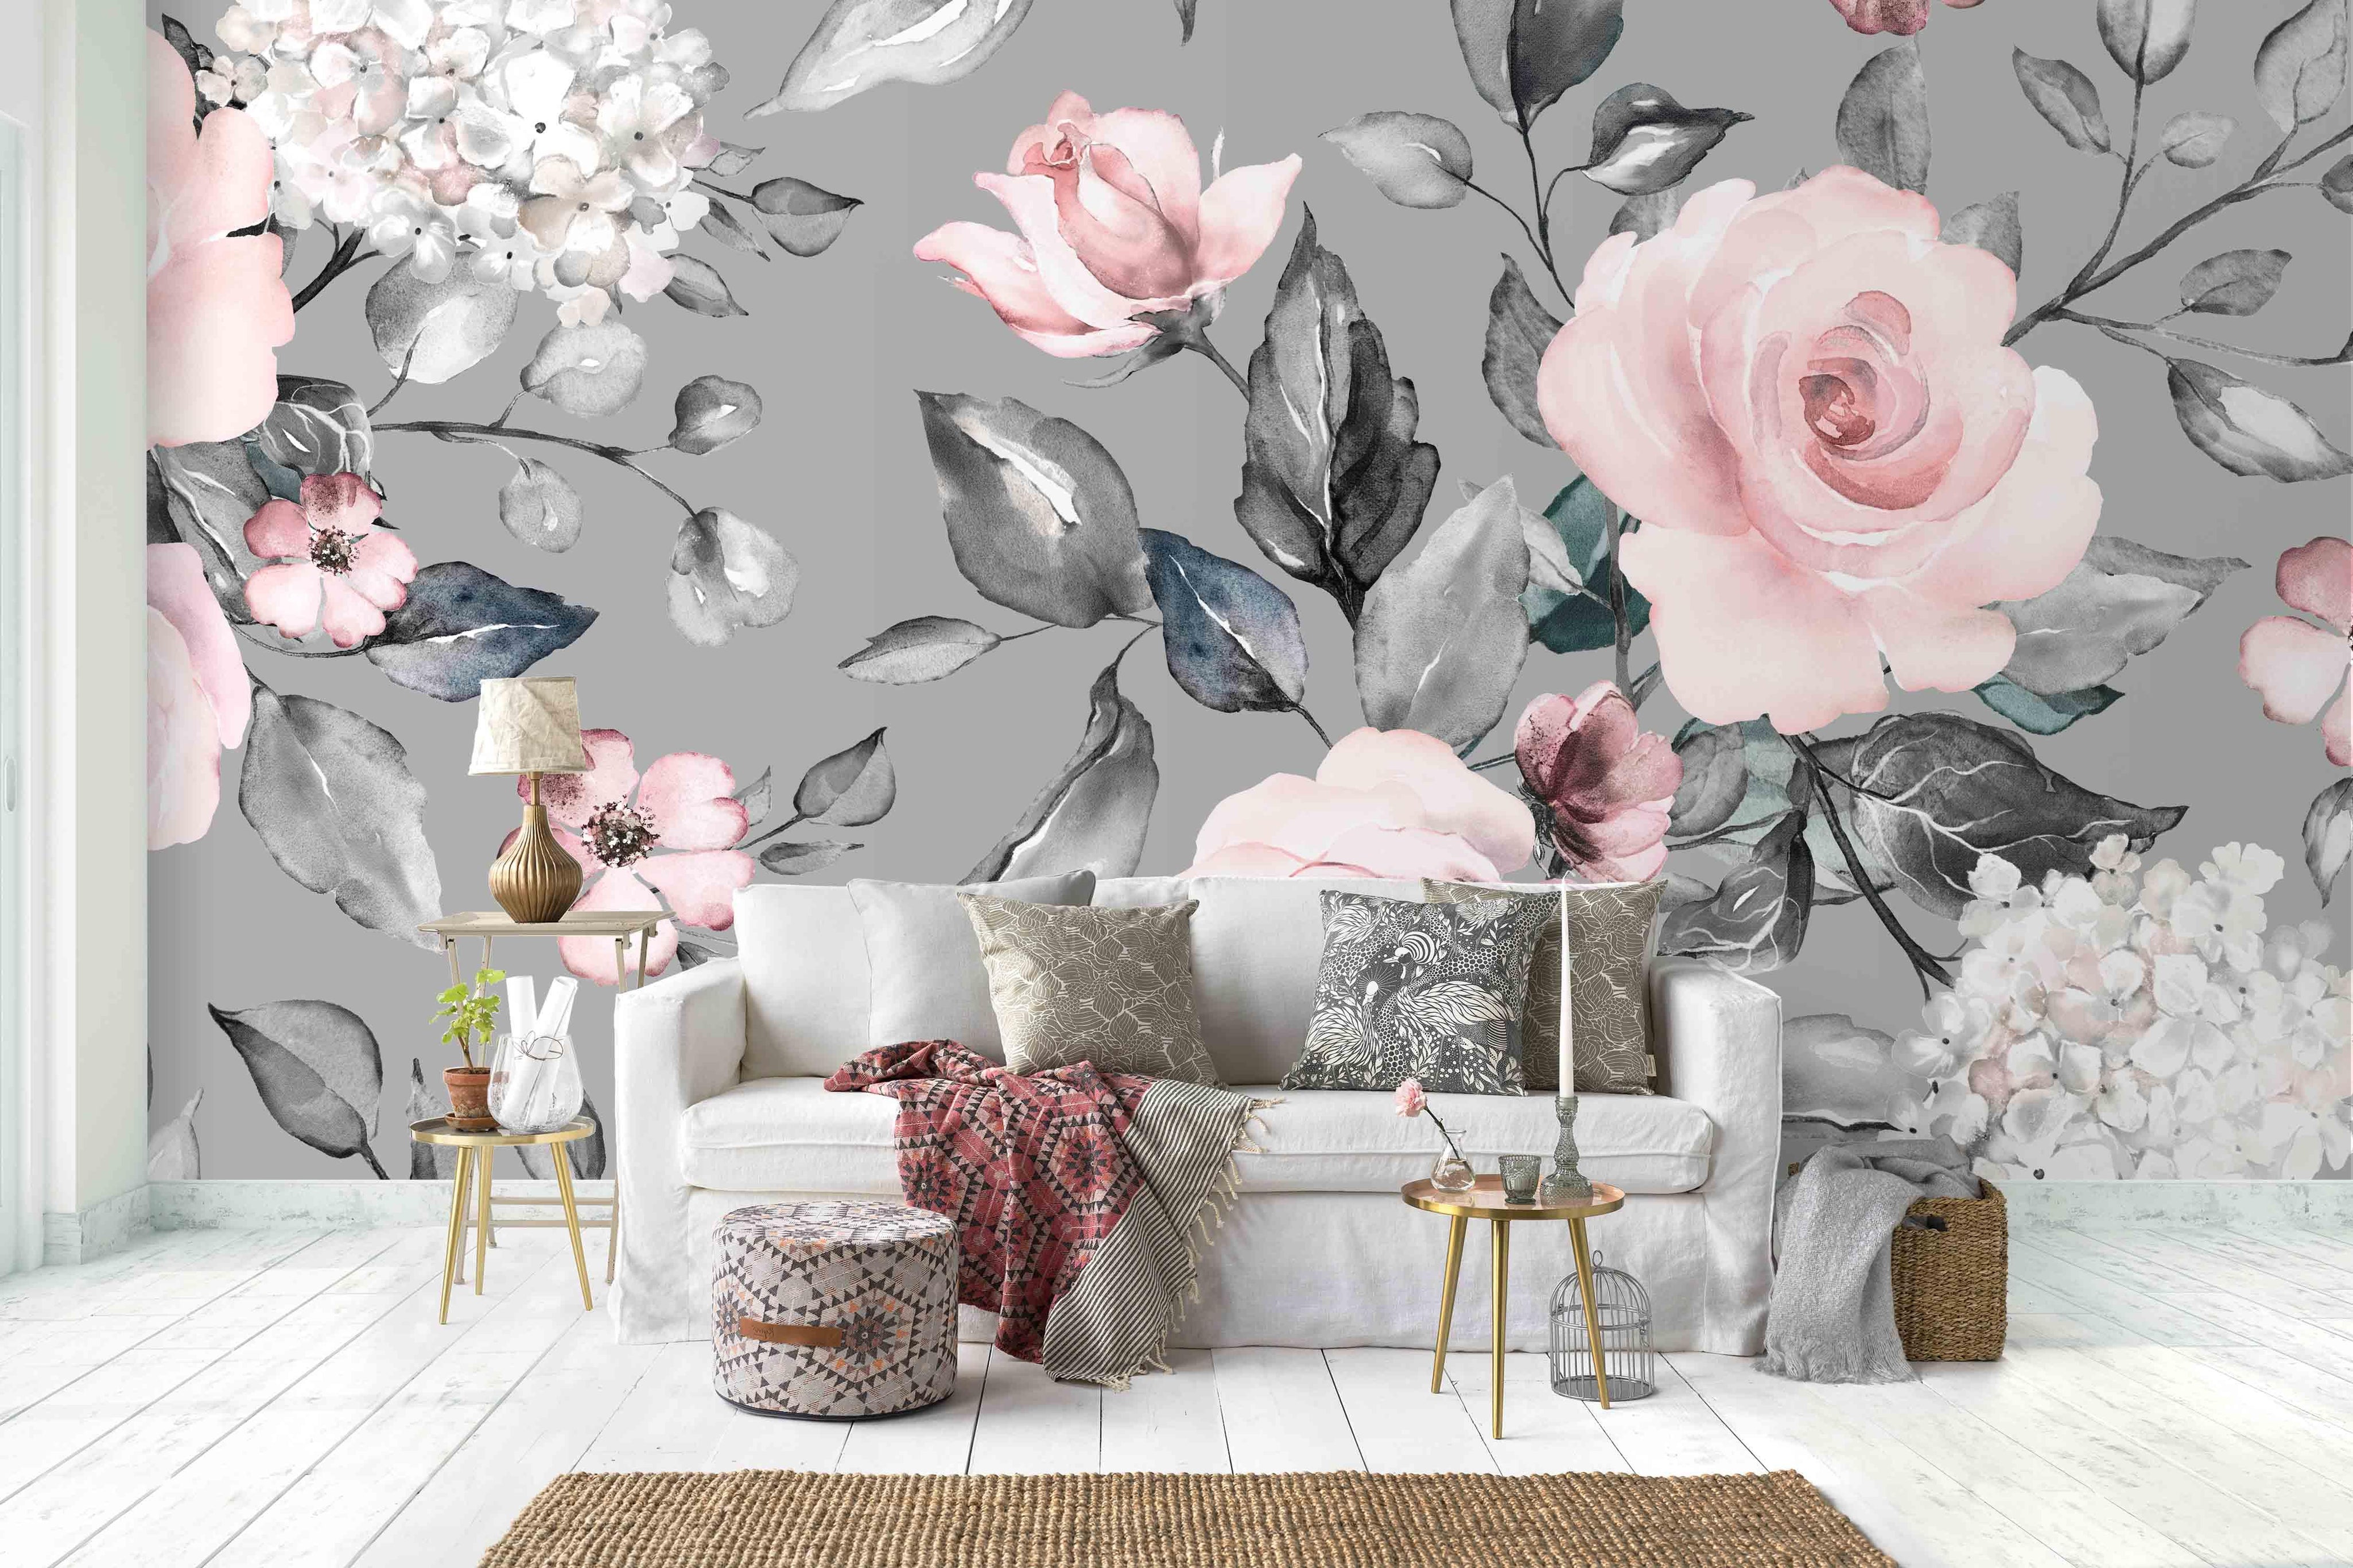 3D Simple Vintage Floral Wall Mural Wallpaper 05- Jess Art Decoration